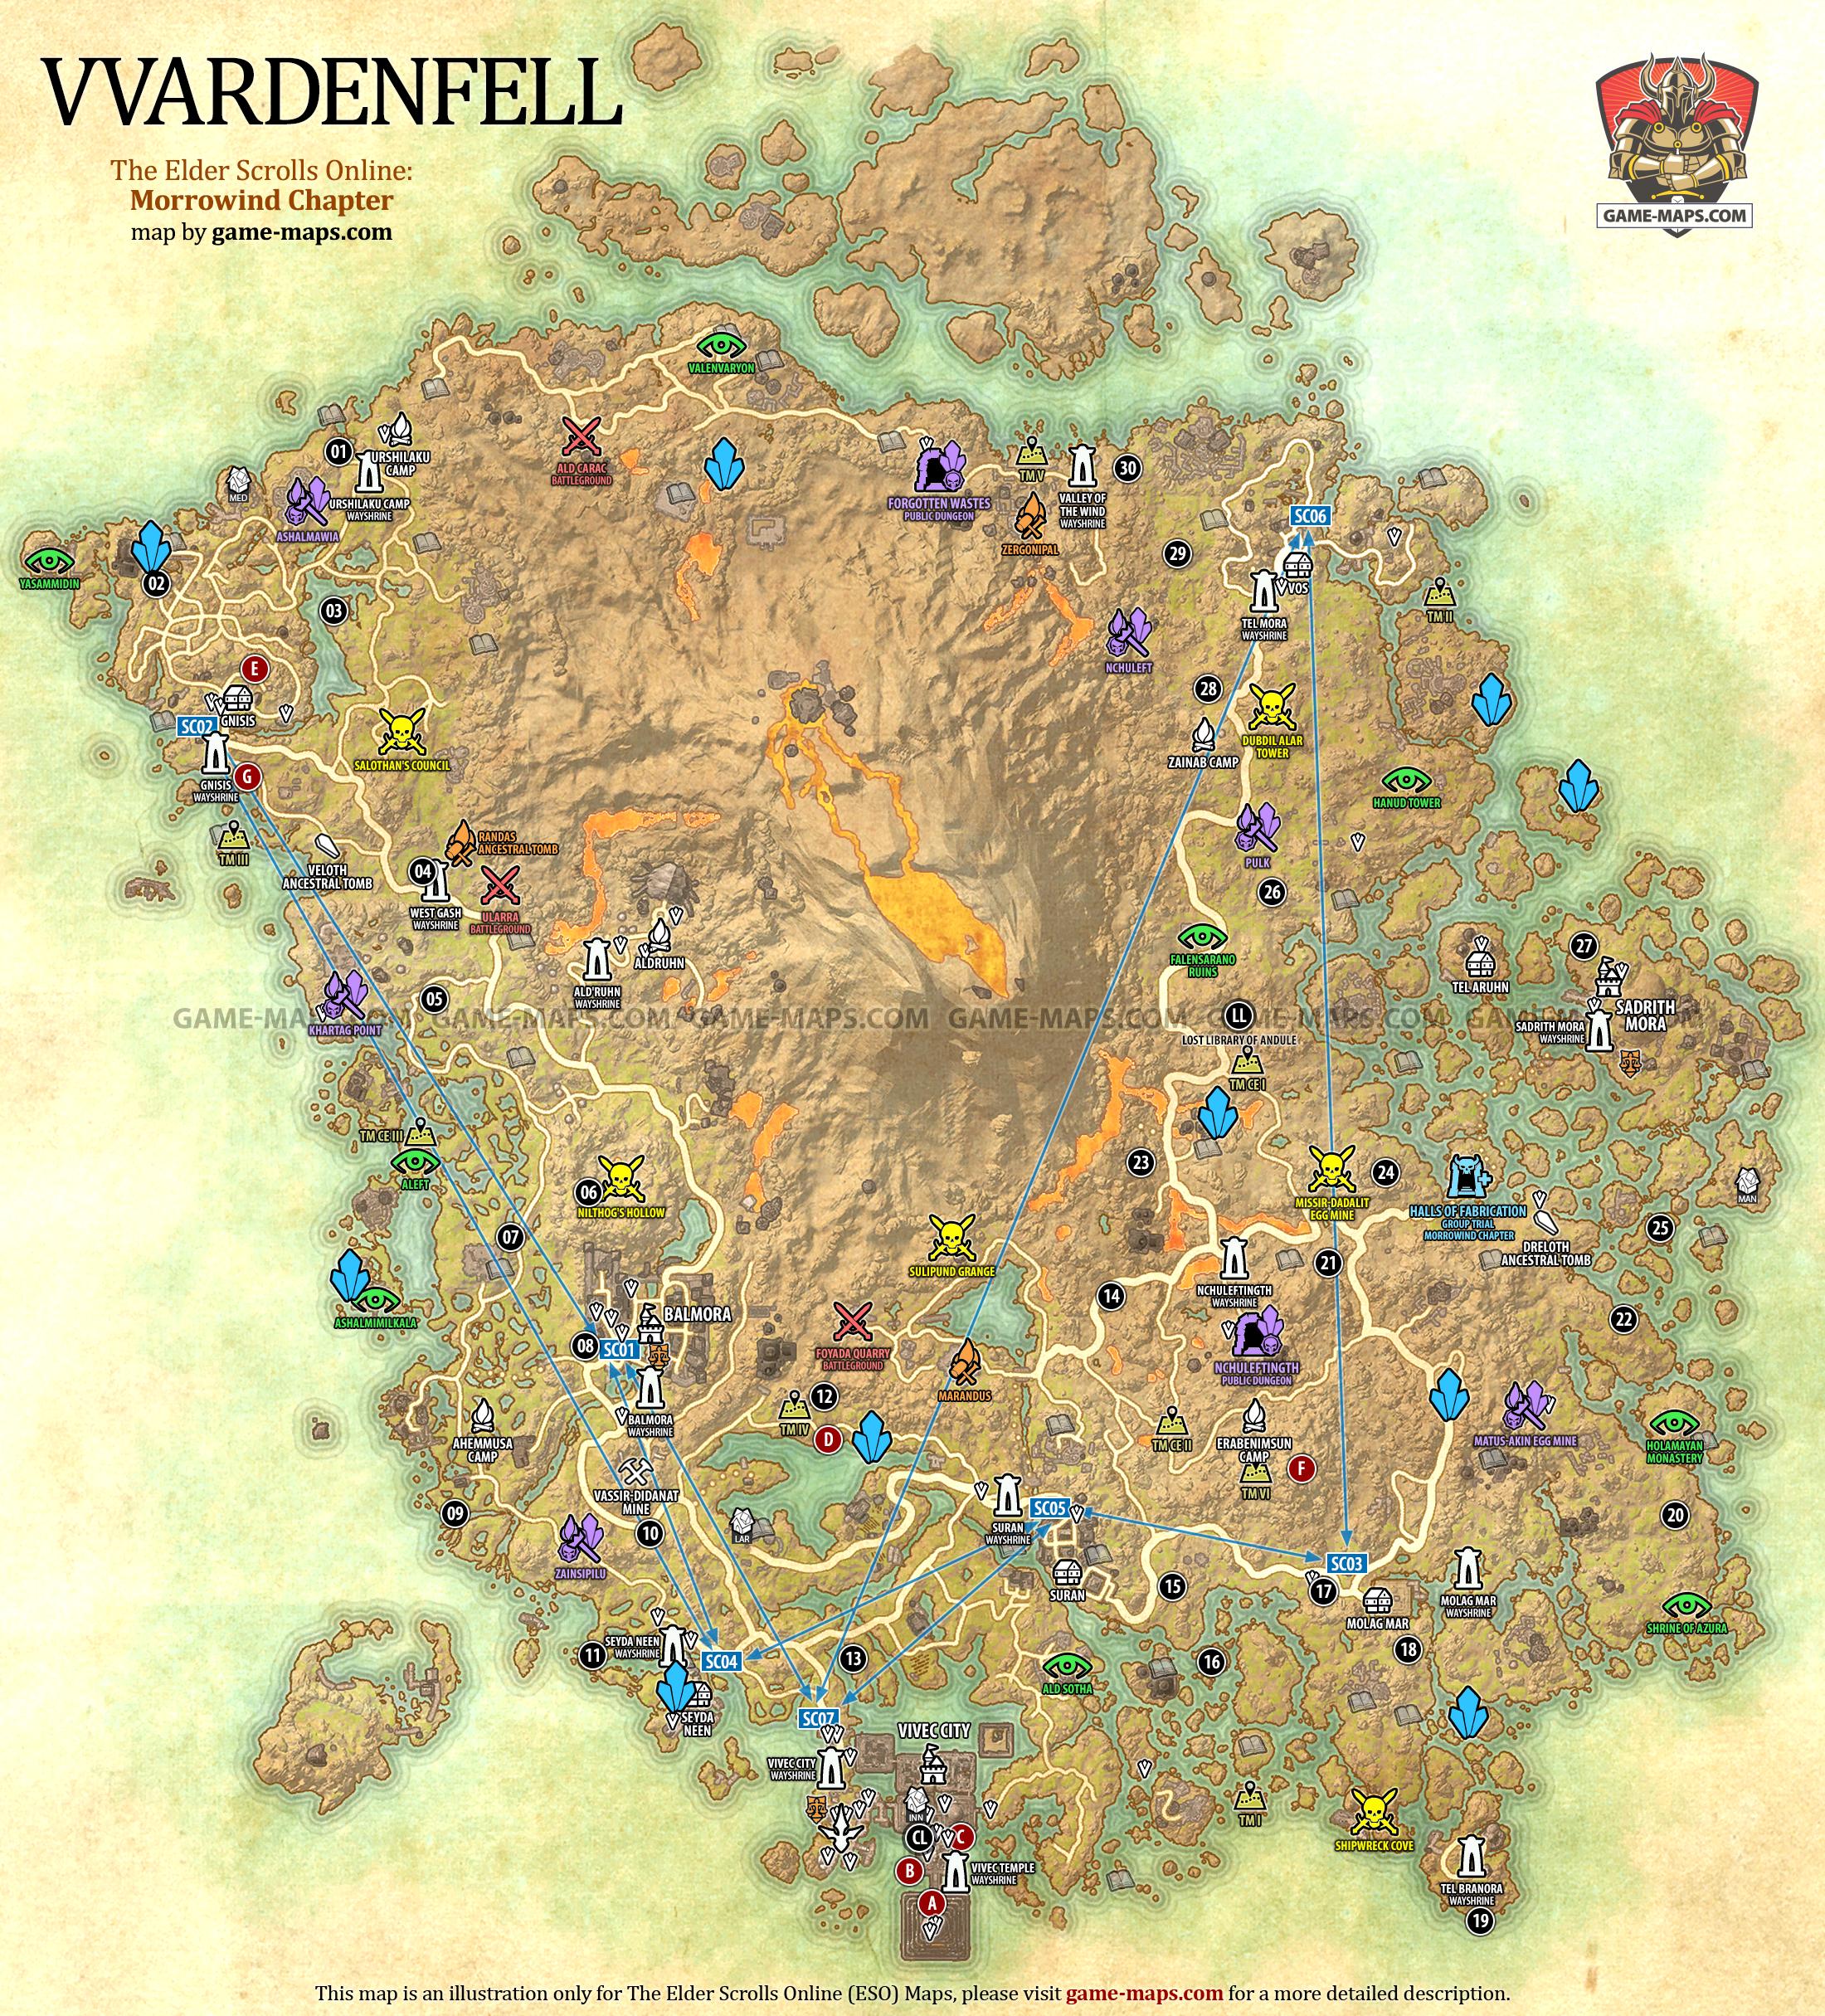 More detailed Vvardenfell map. r/ESOPS4